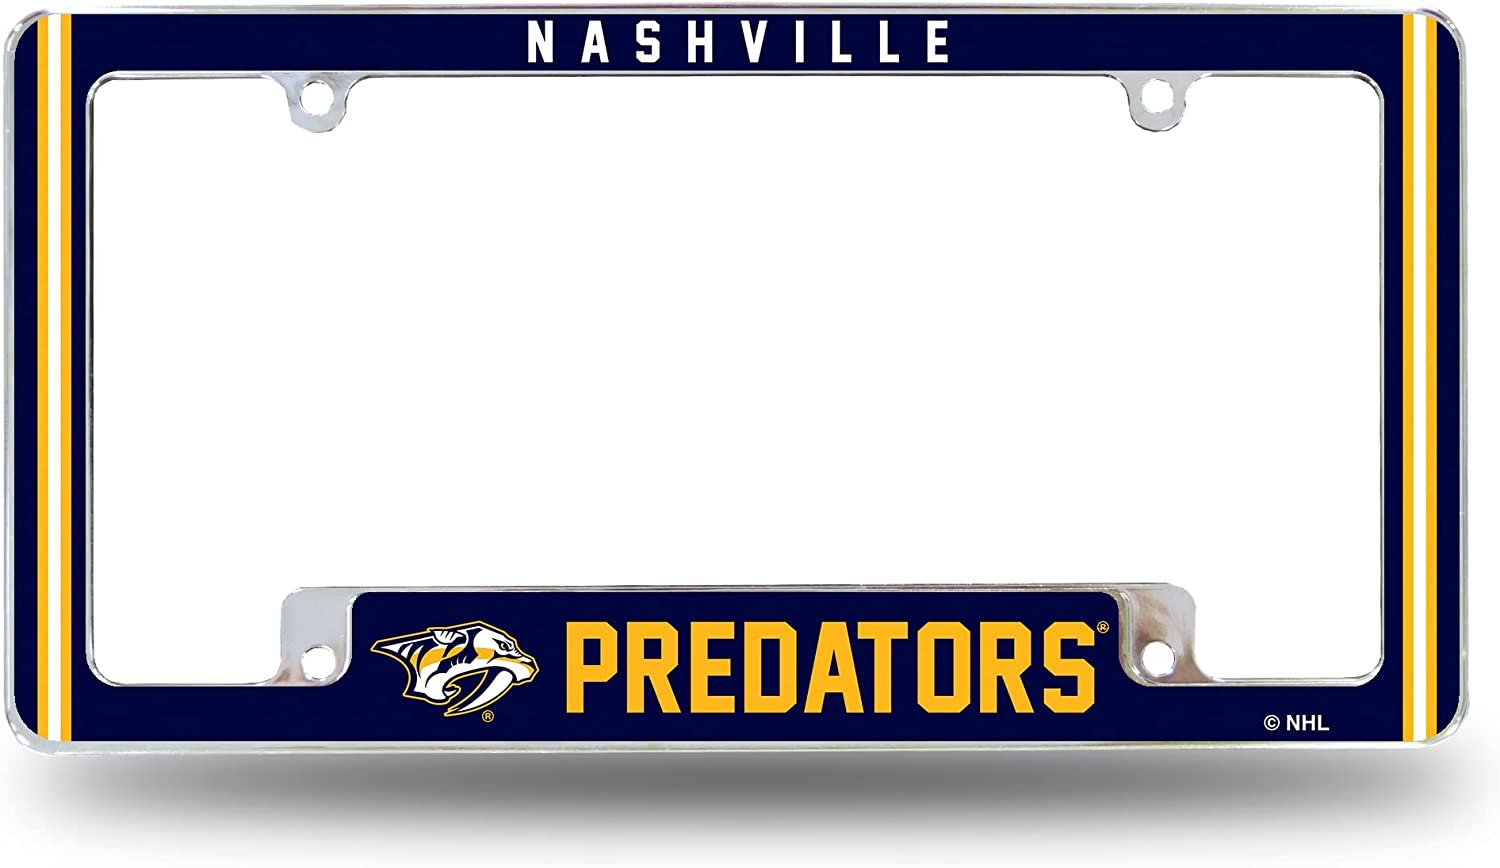 Nashville Predators Metal License Plate Frame Chrome Tag Cover Alternate Design 6x12 Inch